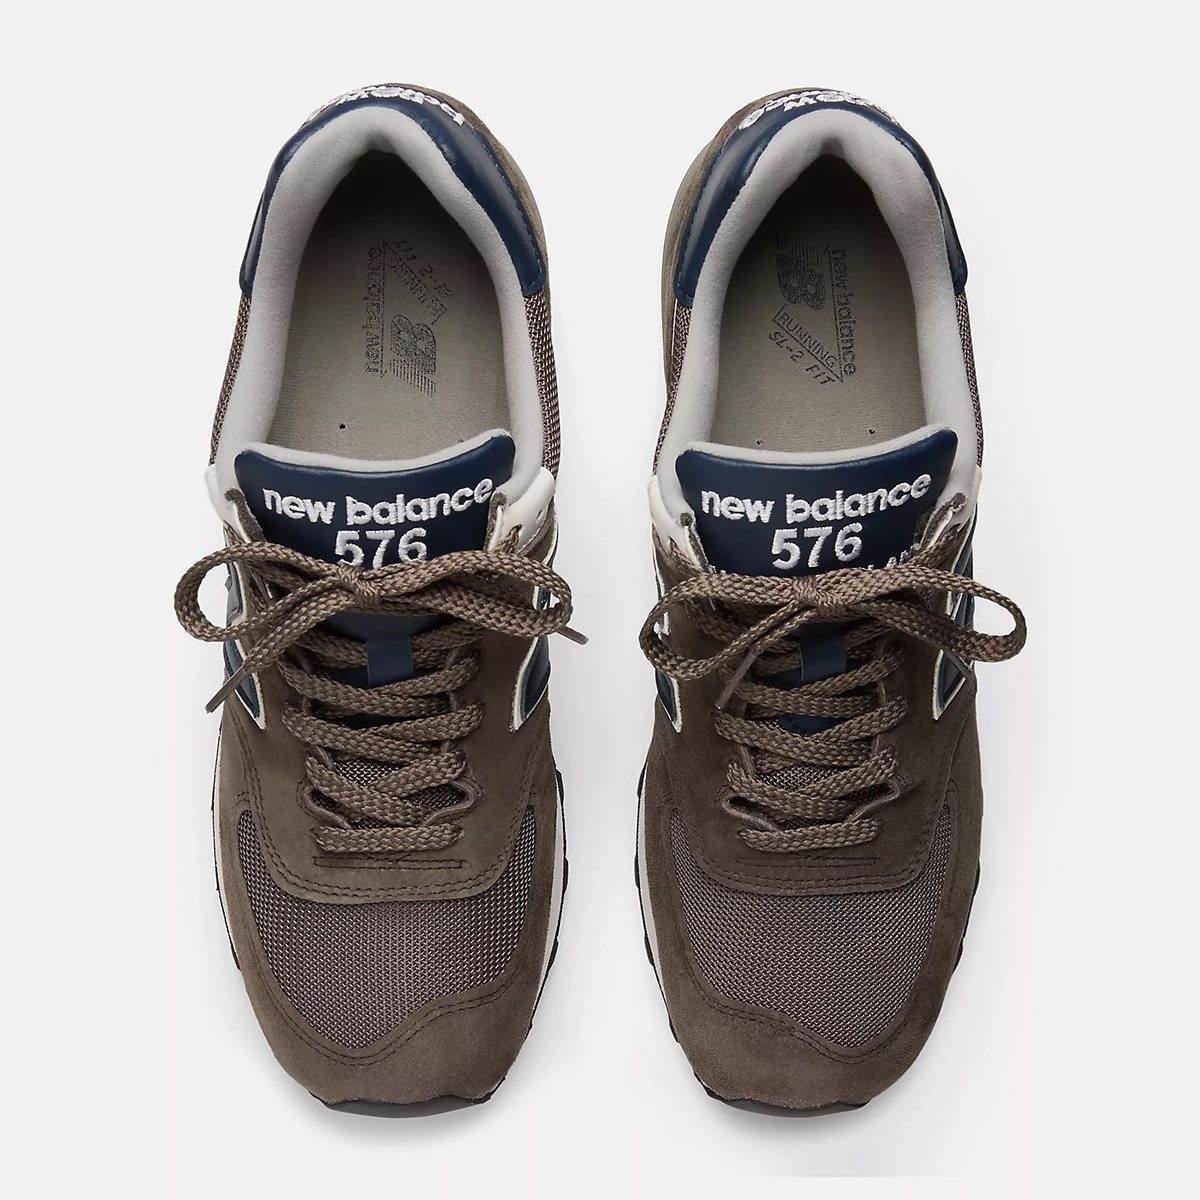 New Balance 990 Herren Schuhe Made In Uk Morel Navy Blazer Vaporous Grey Ou576nbr 4